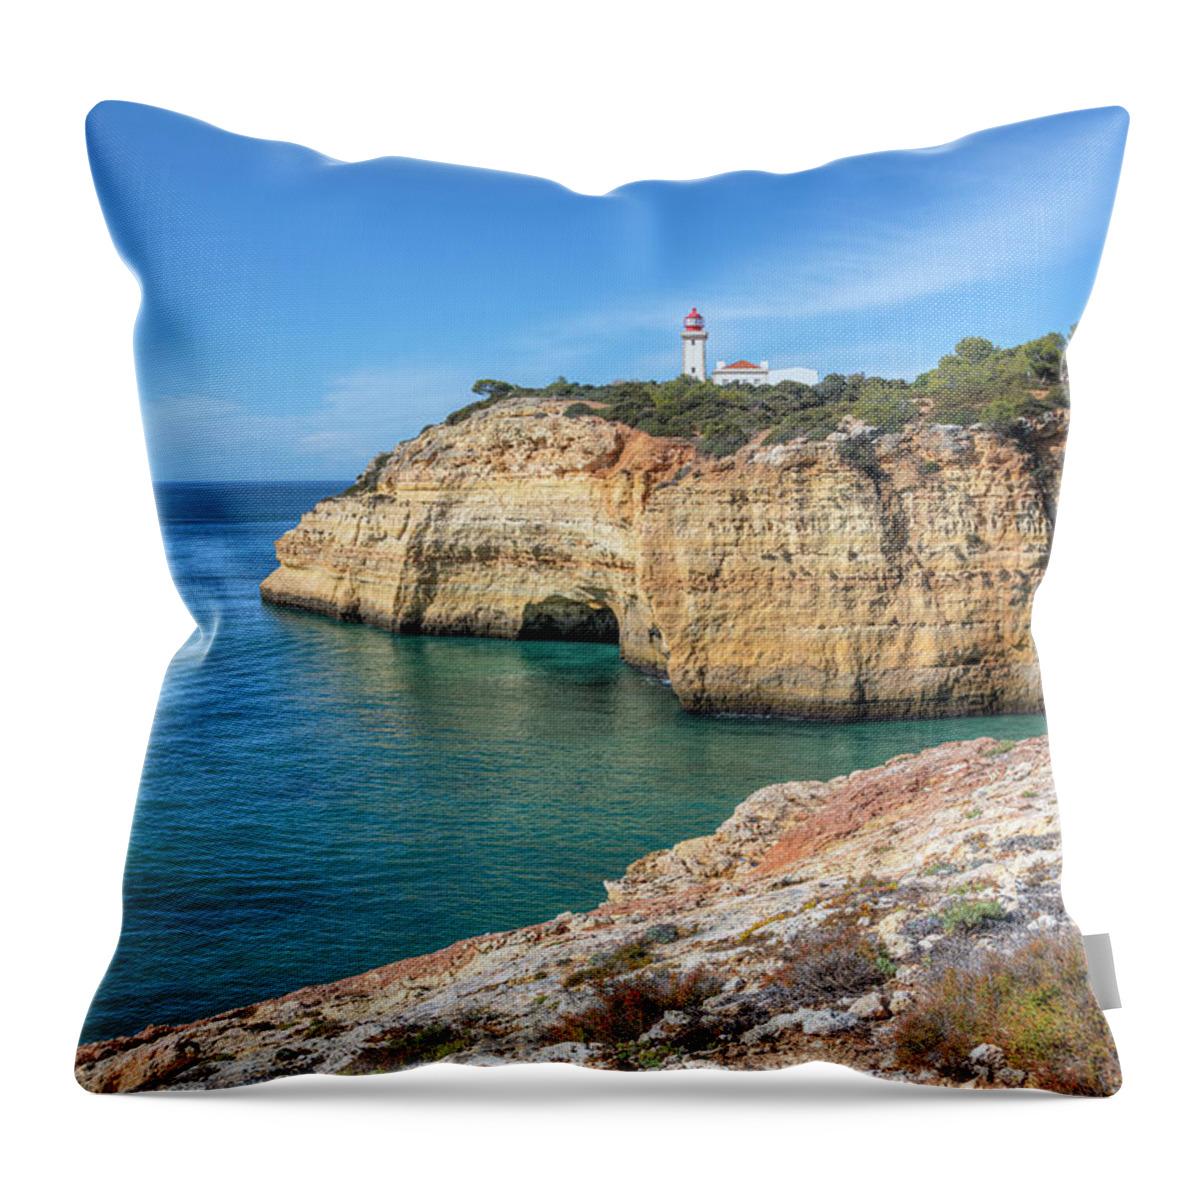 Alfanzina Throw Pillow featuring the photograph Alfanzina - Portugal #1 by Joana Kruse